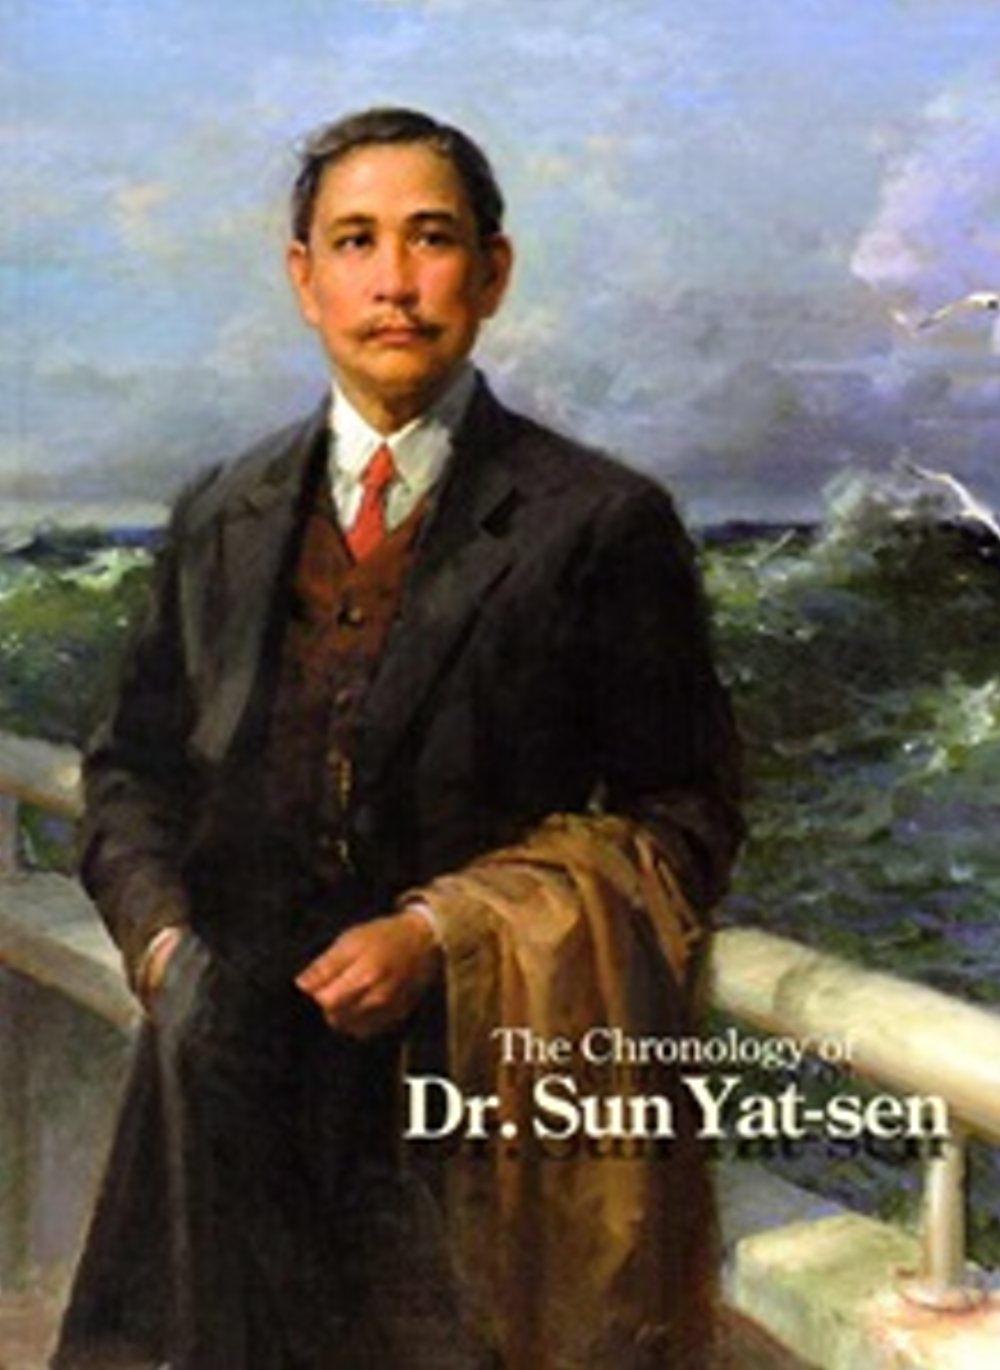 The chronology of Dr. Sun Yat-sen